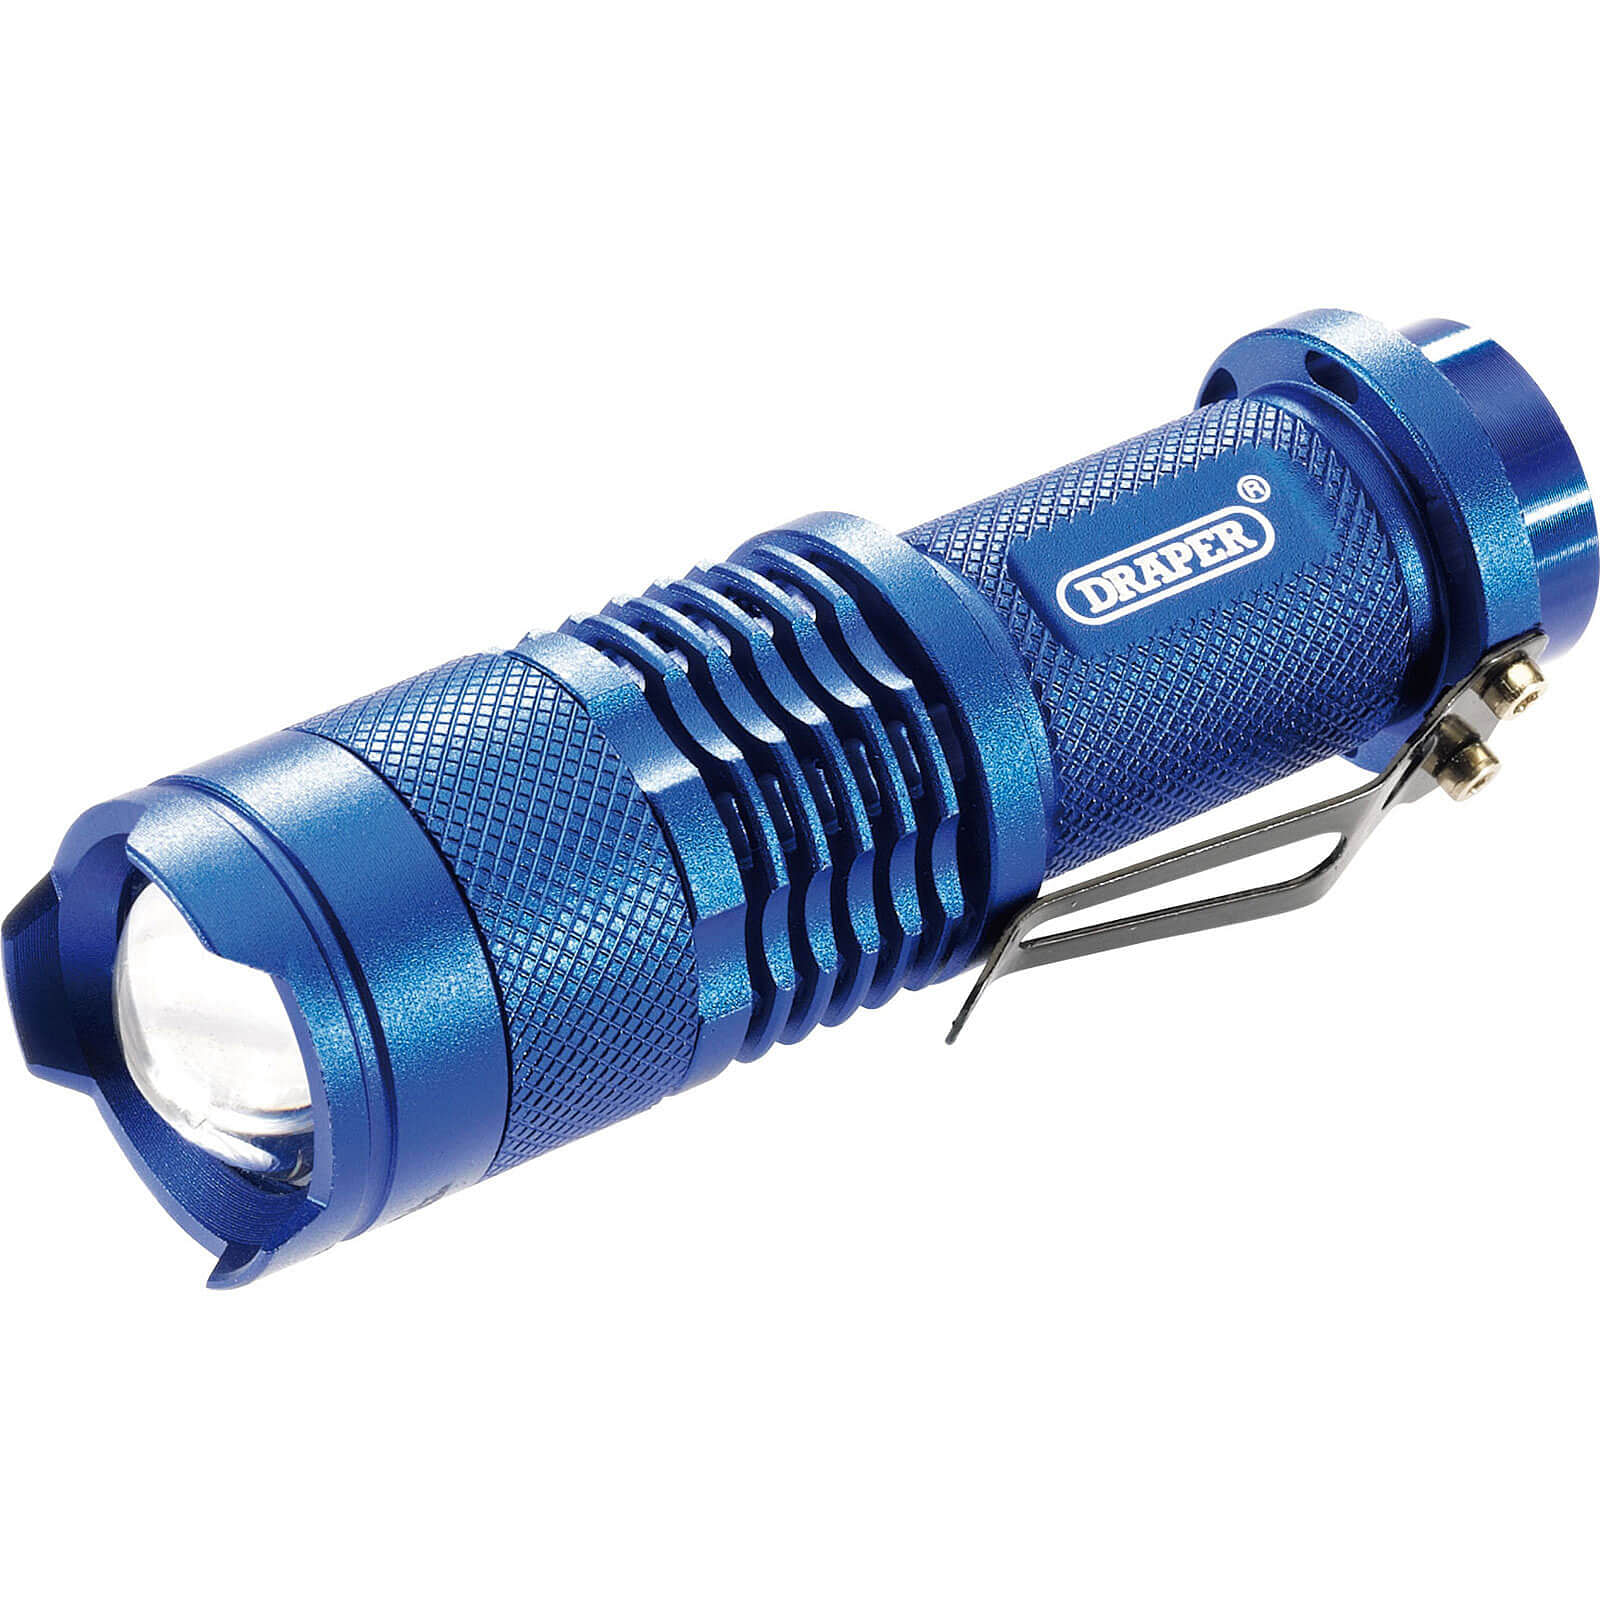 Draper 3w led rechargeable spotlight Torch